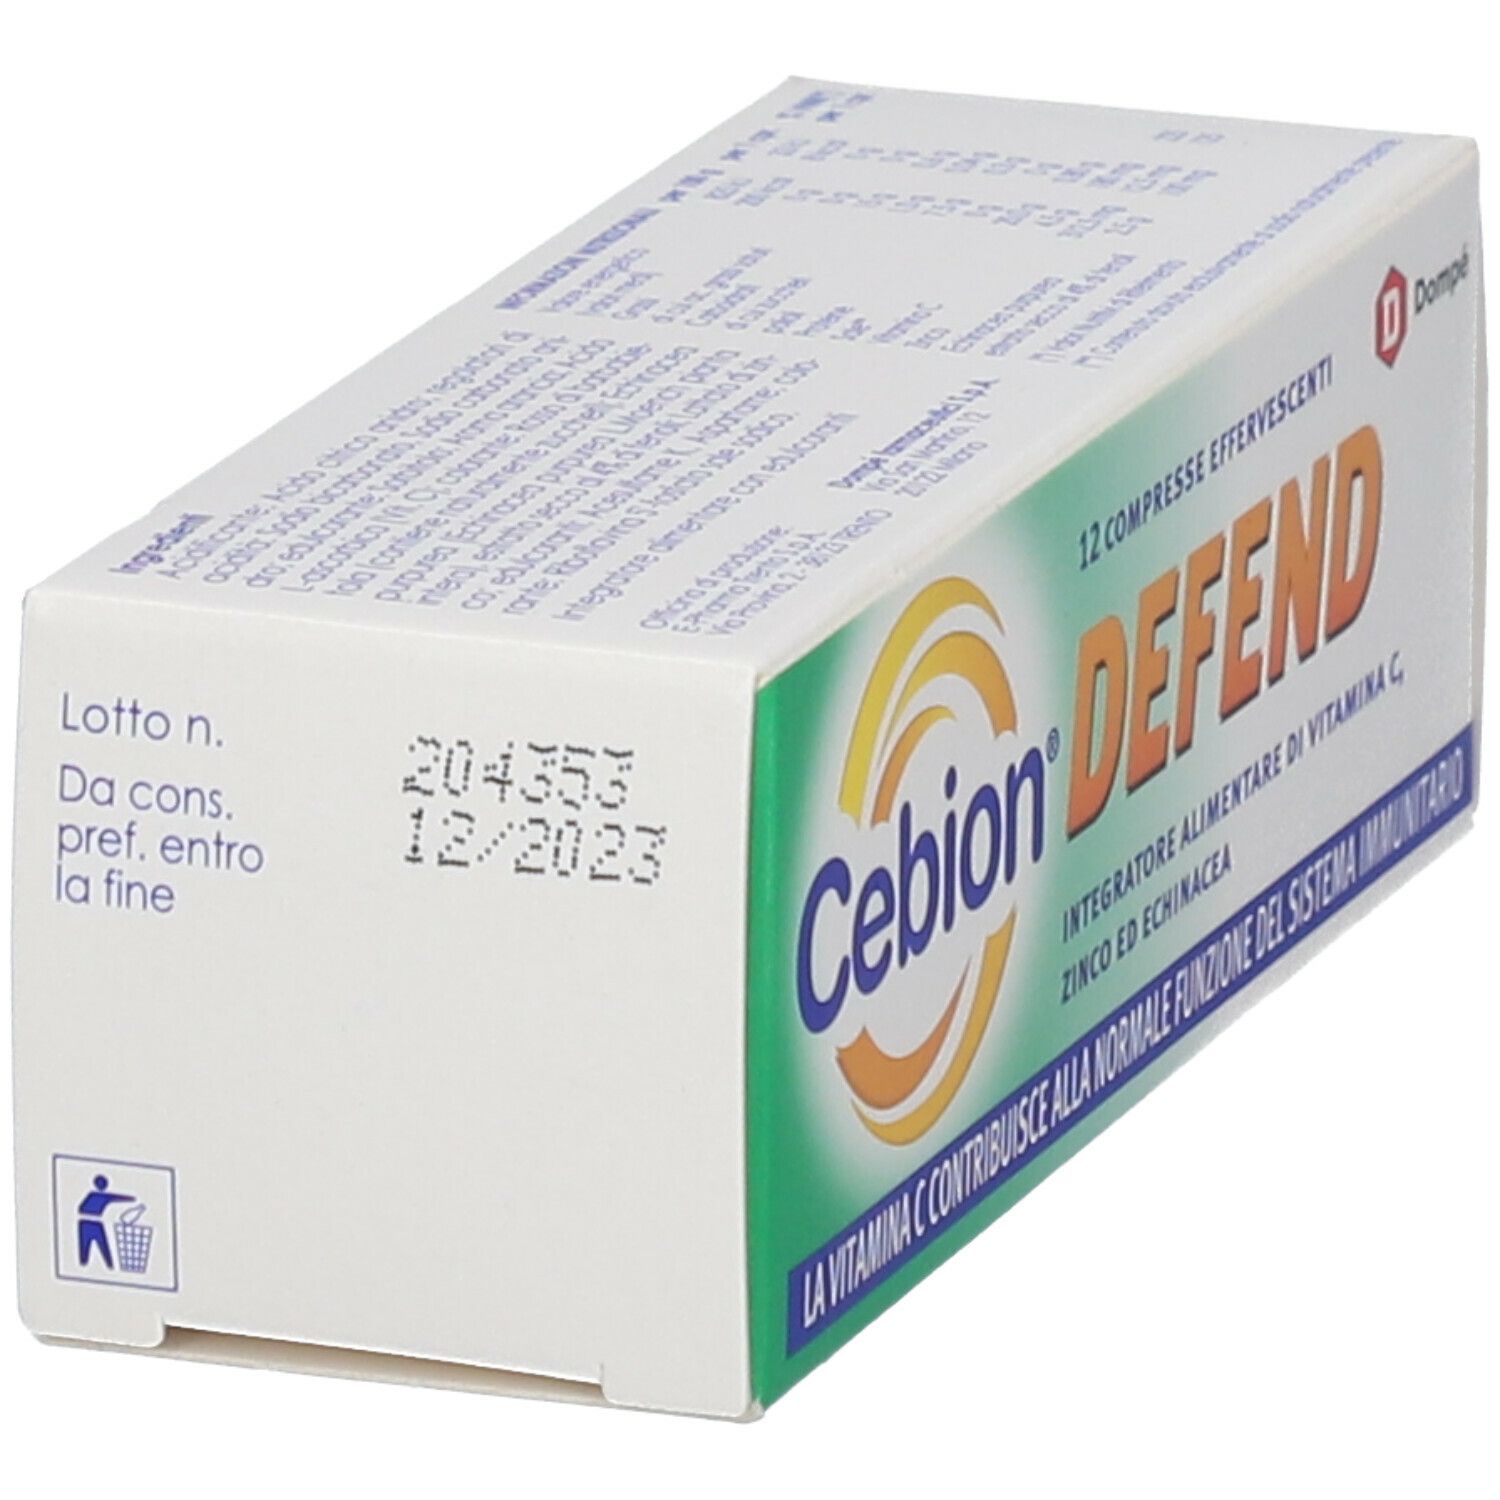 Cebion® Defend Compresse Effervescenti